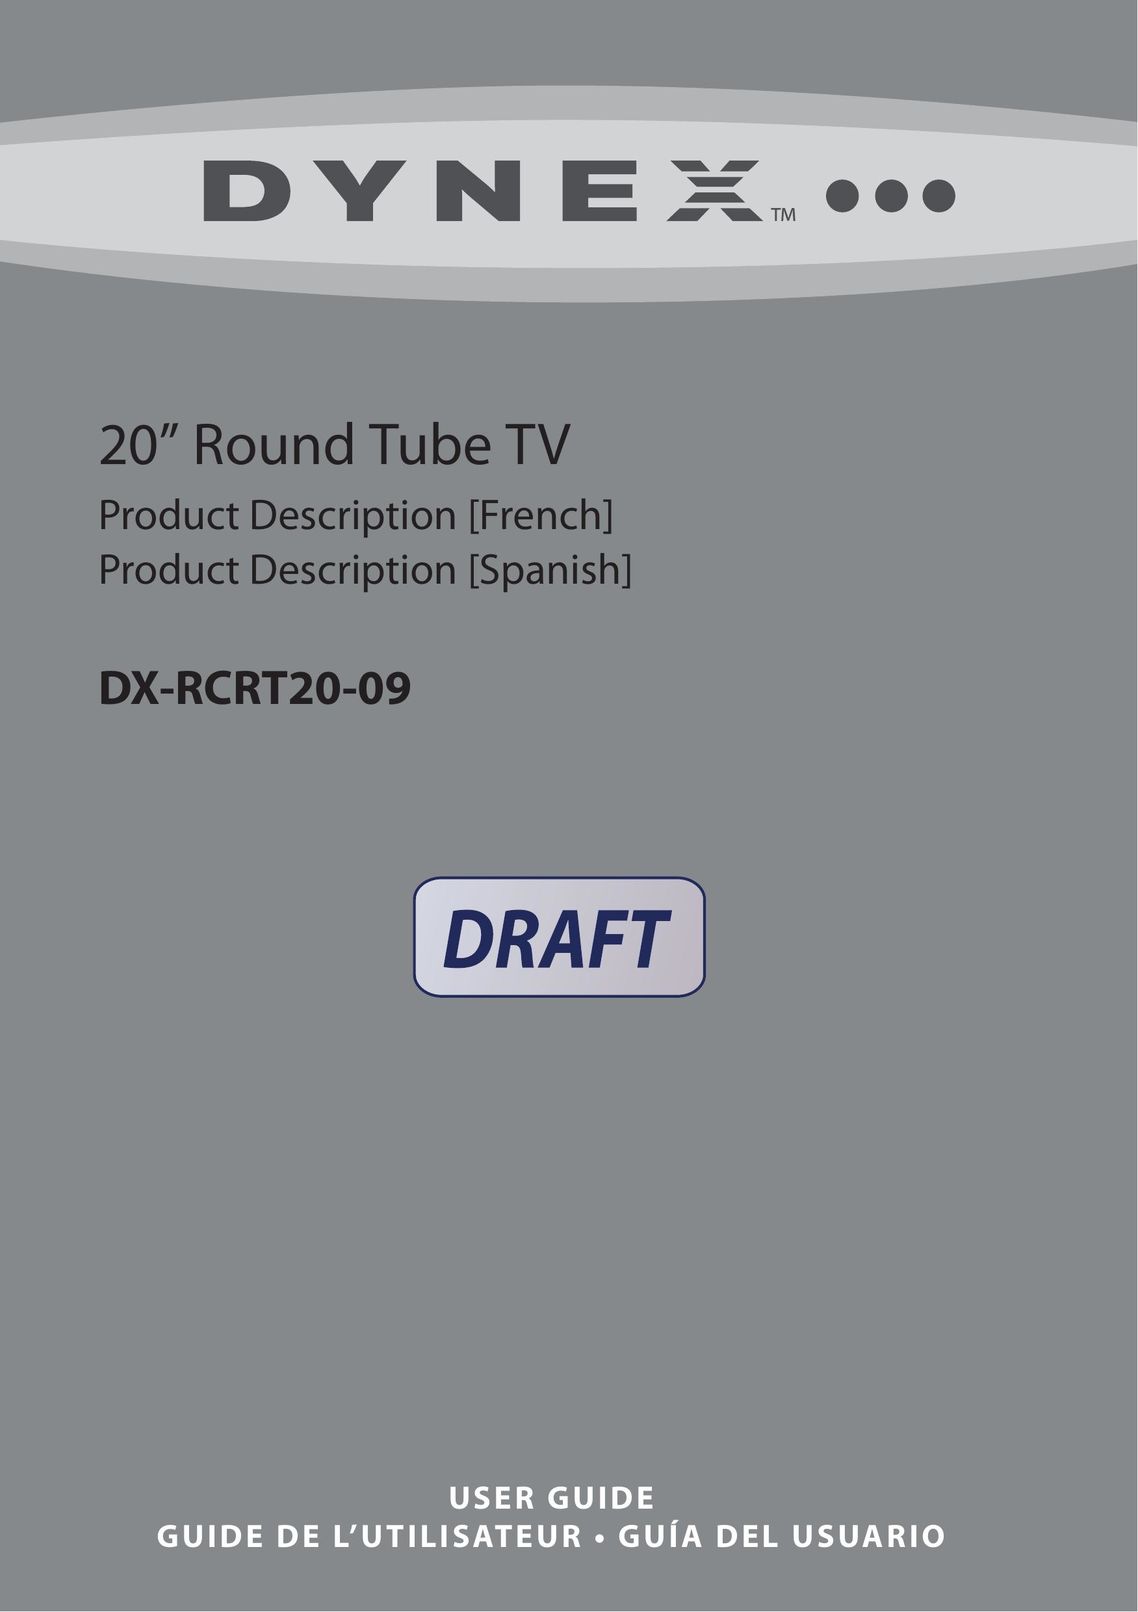 Dynex DX-RCRT20-09 CRT Television User Manual